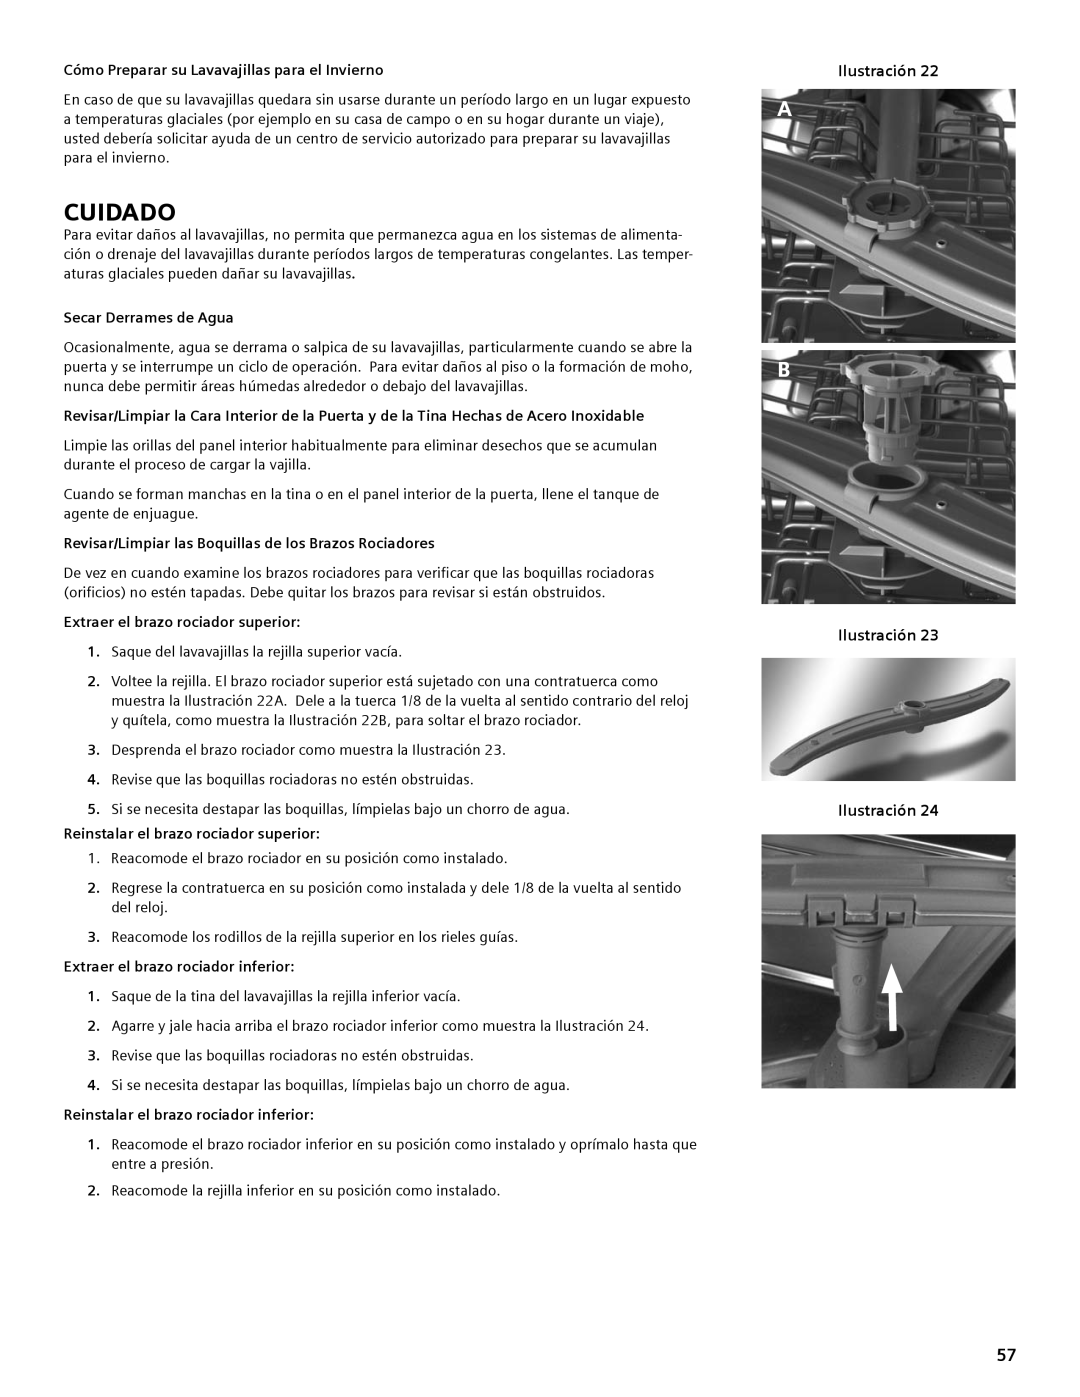 Thermador DWHD94EP, DWHD94BS, DWHD94BP manual Cuidado, Ilustración Ilustración, Secar Derrames de Agua 